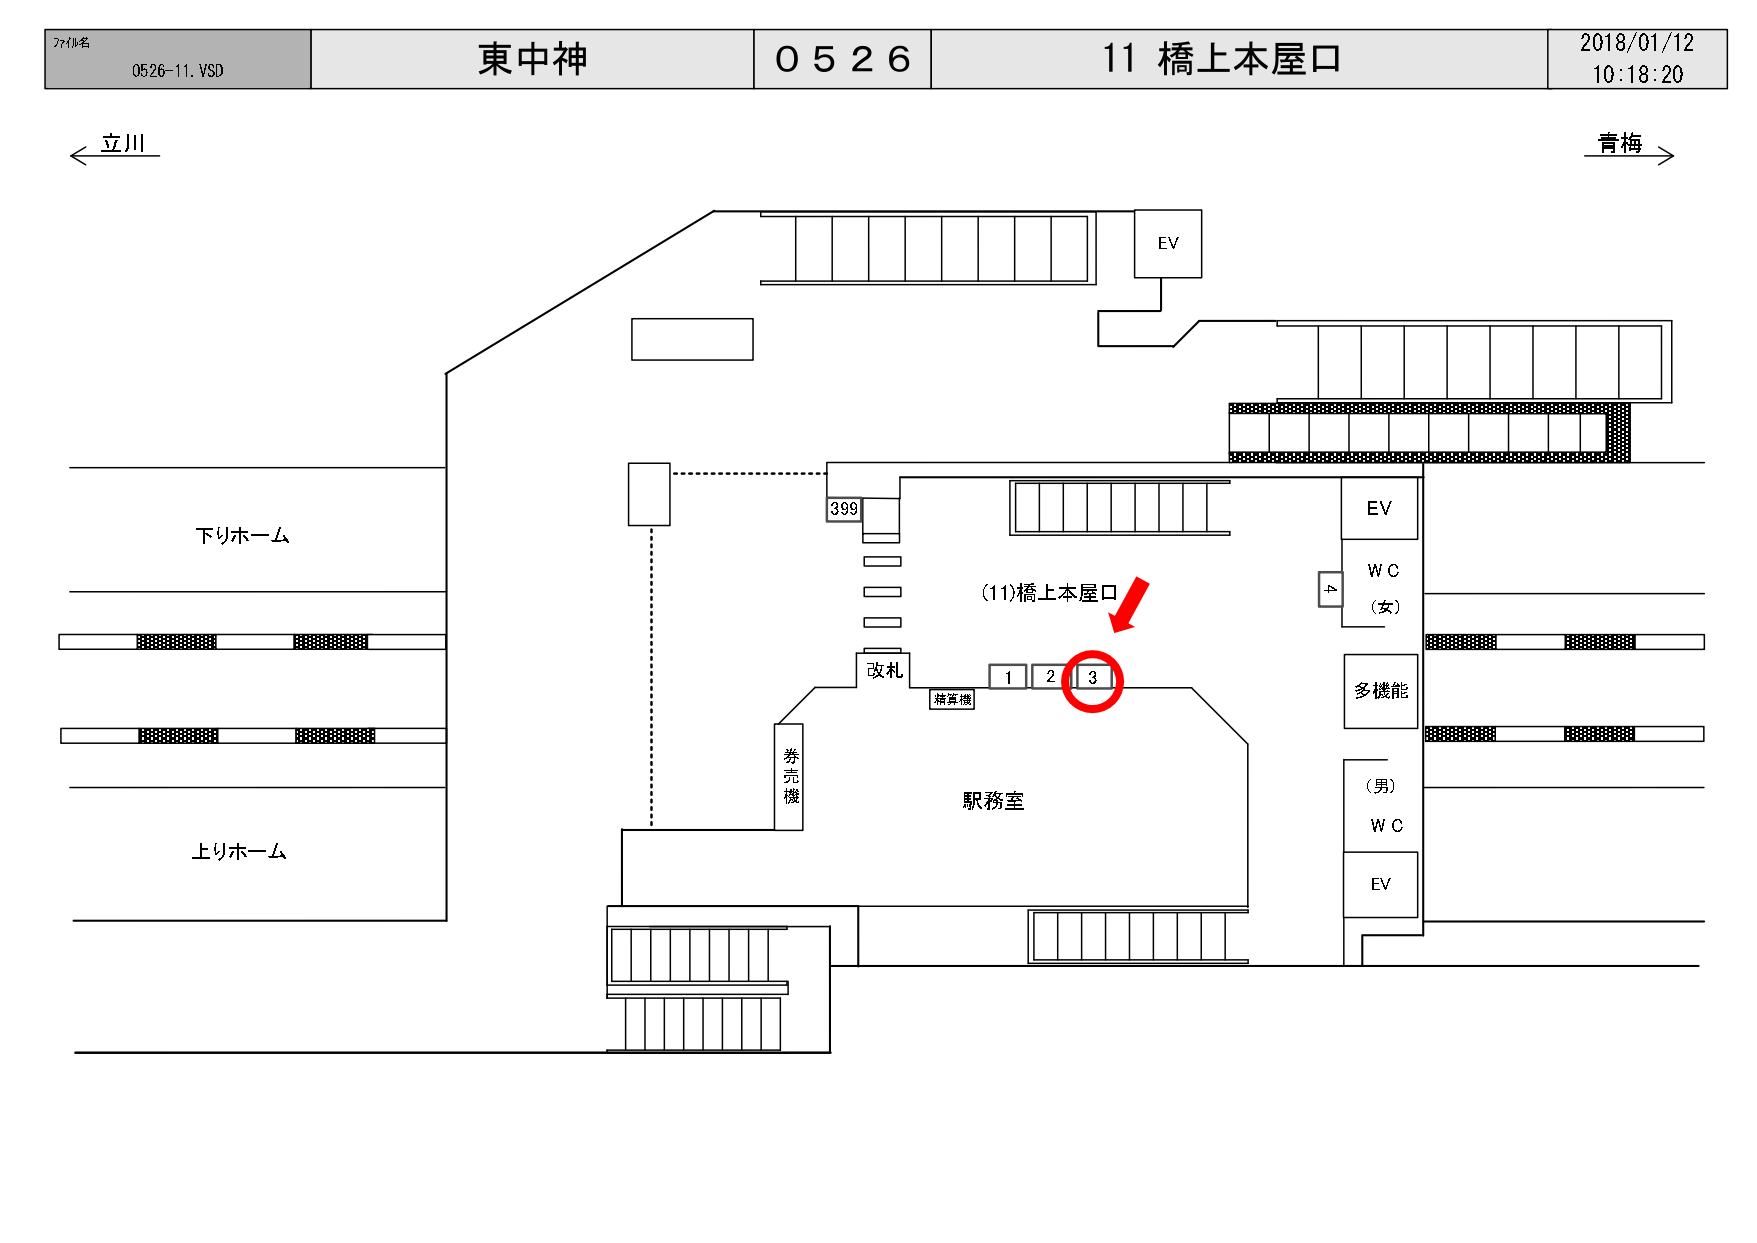 JR東日本 東中神駅 10607-0526-11-003 駅看板・駅広告媒体一覧 | 駅 ...